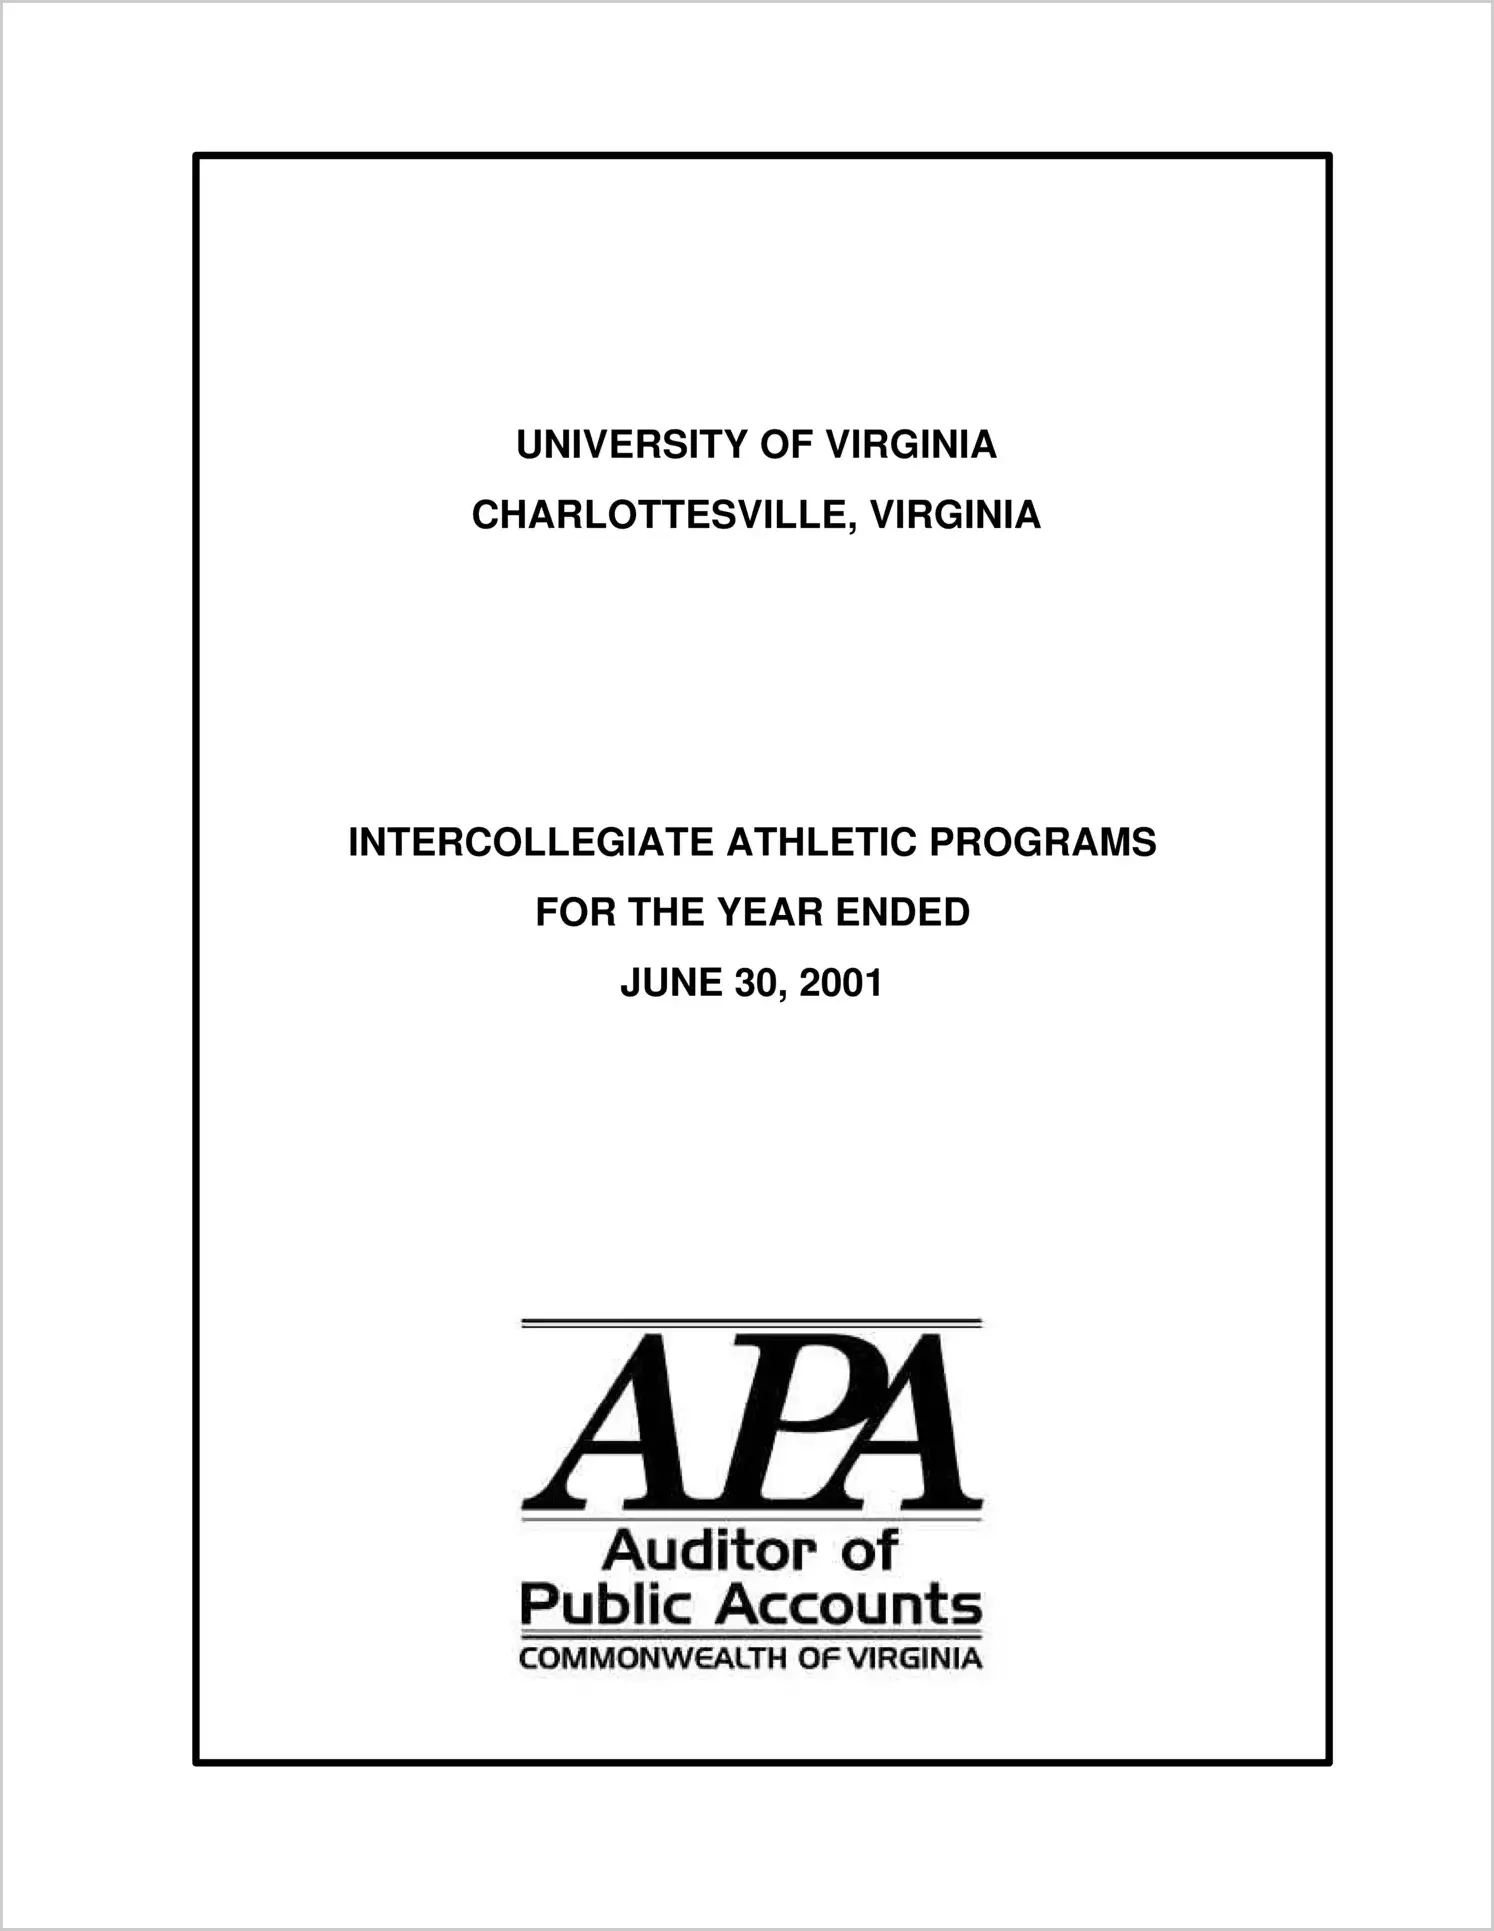 University of Virginia Intercollegiate Athletics Programs for the year ended June 30, 2001